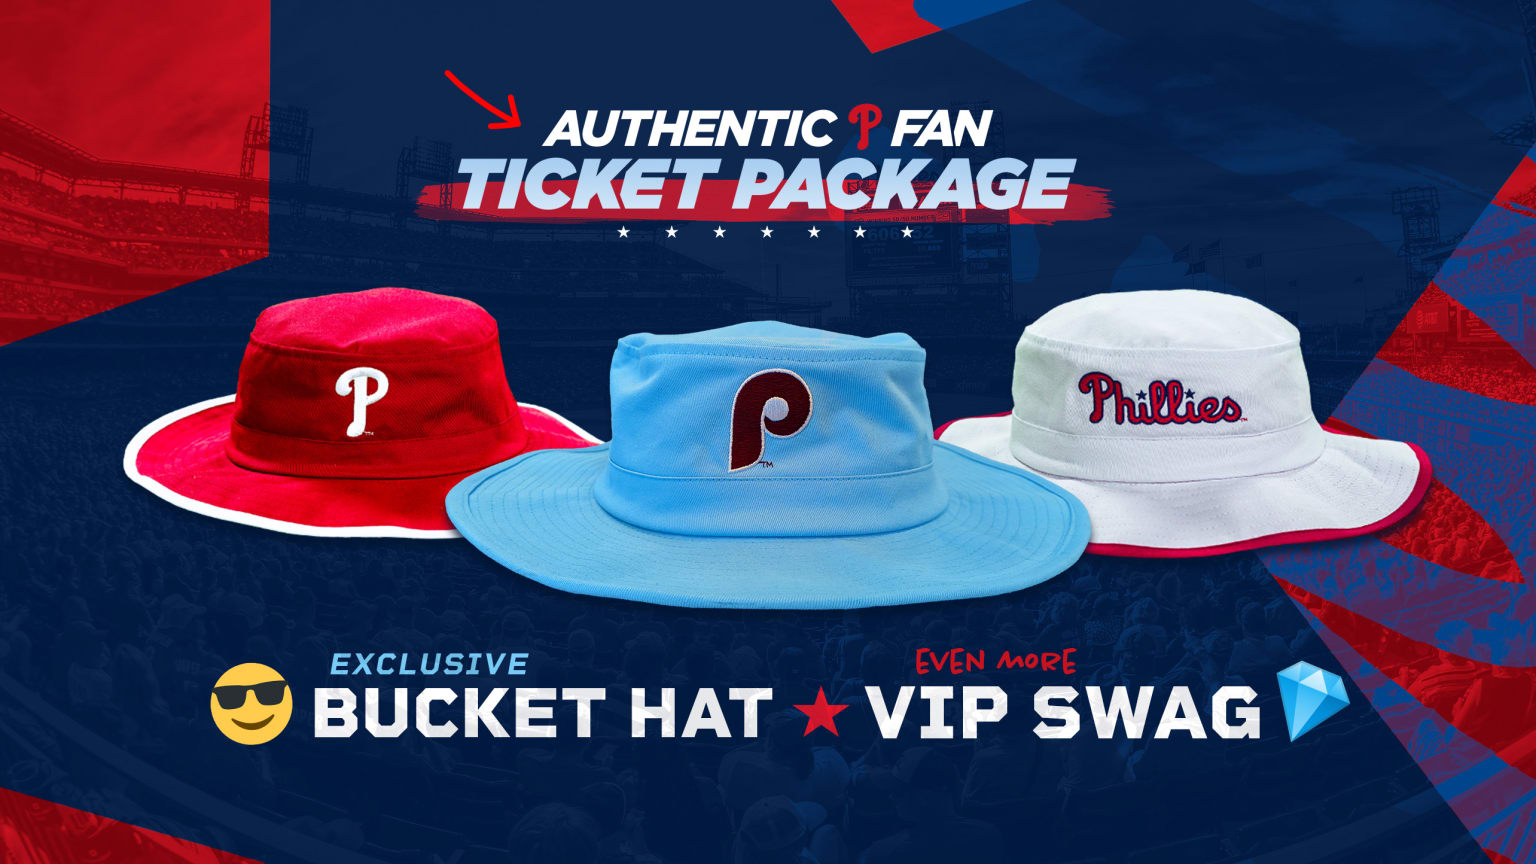 Authentic Fan Ticket Package Philadelphia Phillies